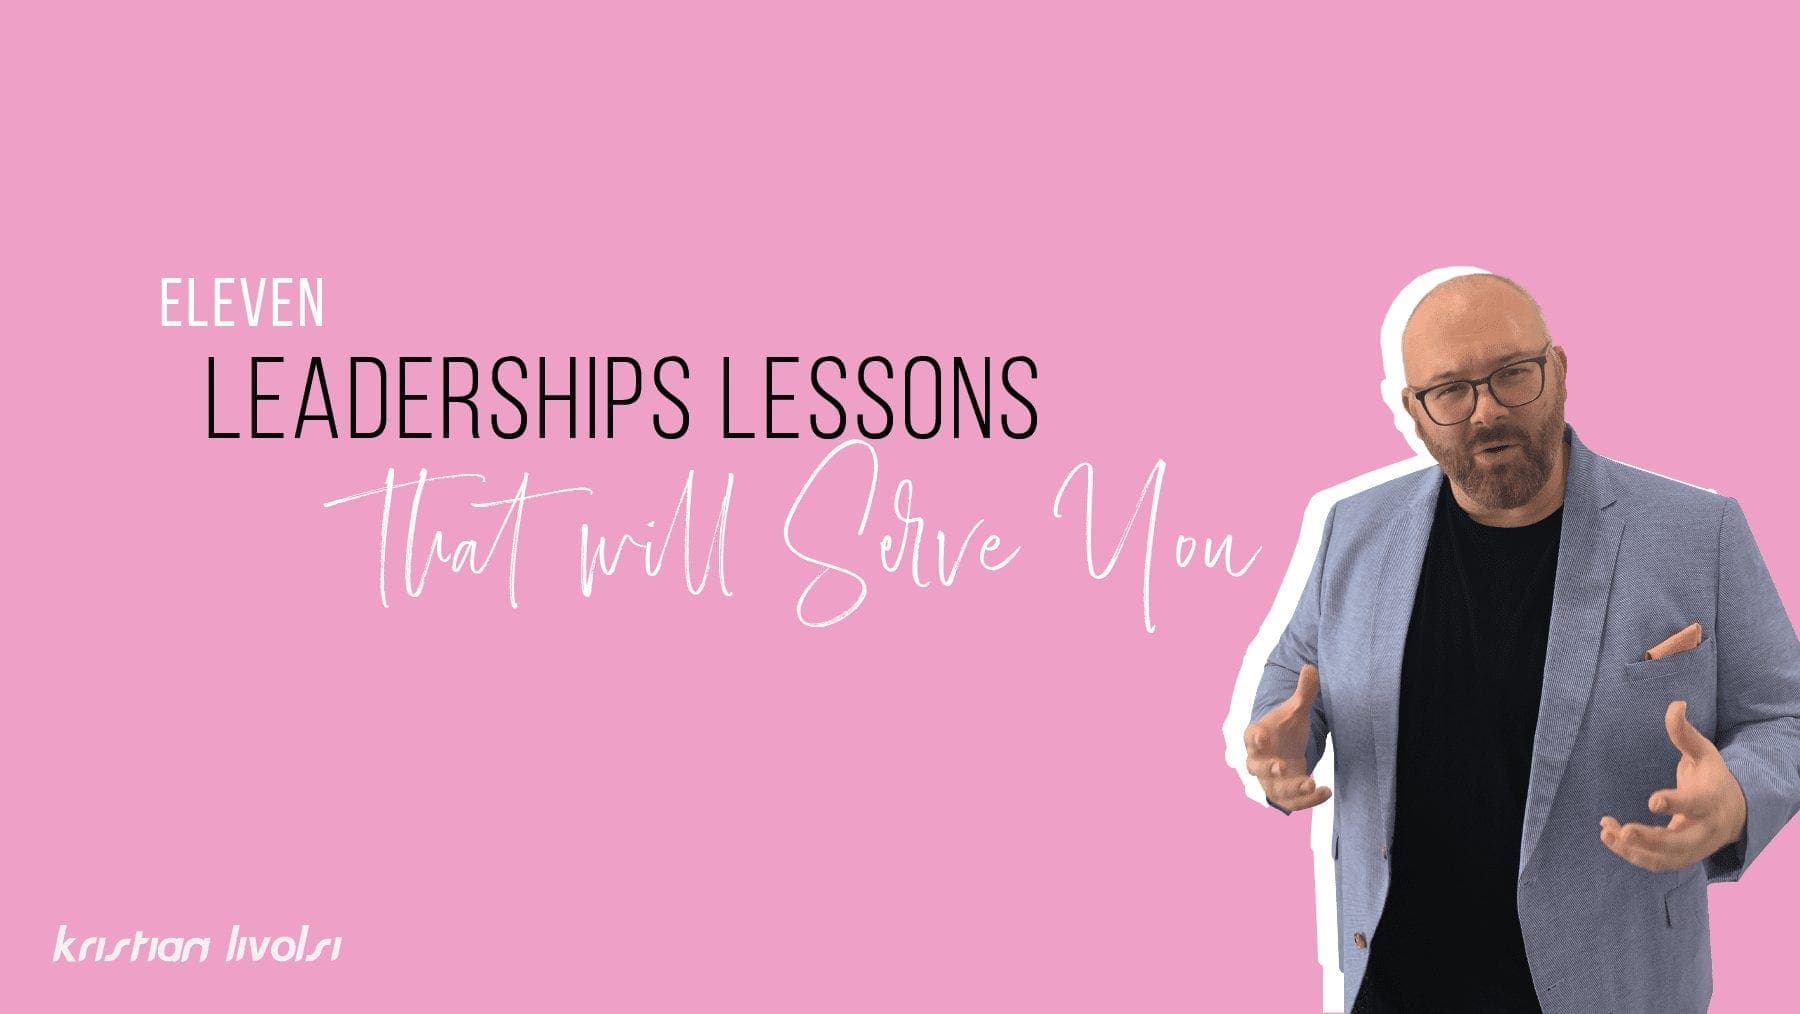 11 leadership lessons by kristian livolsi